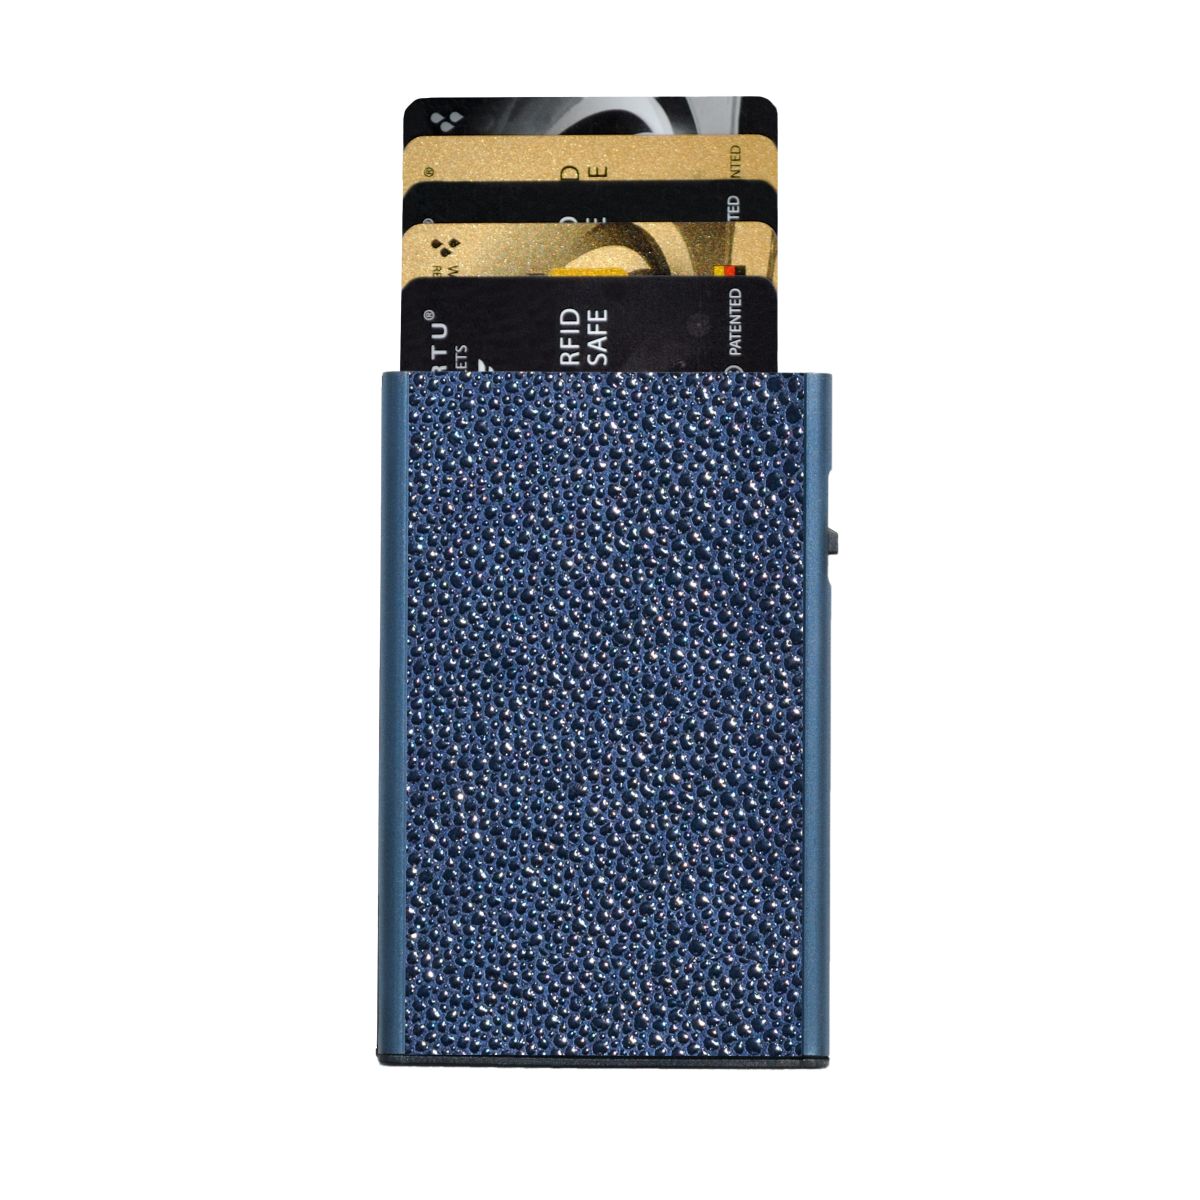 TRU VIRTU Card Case Click n Slide Wallet - Sting Ray Blue